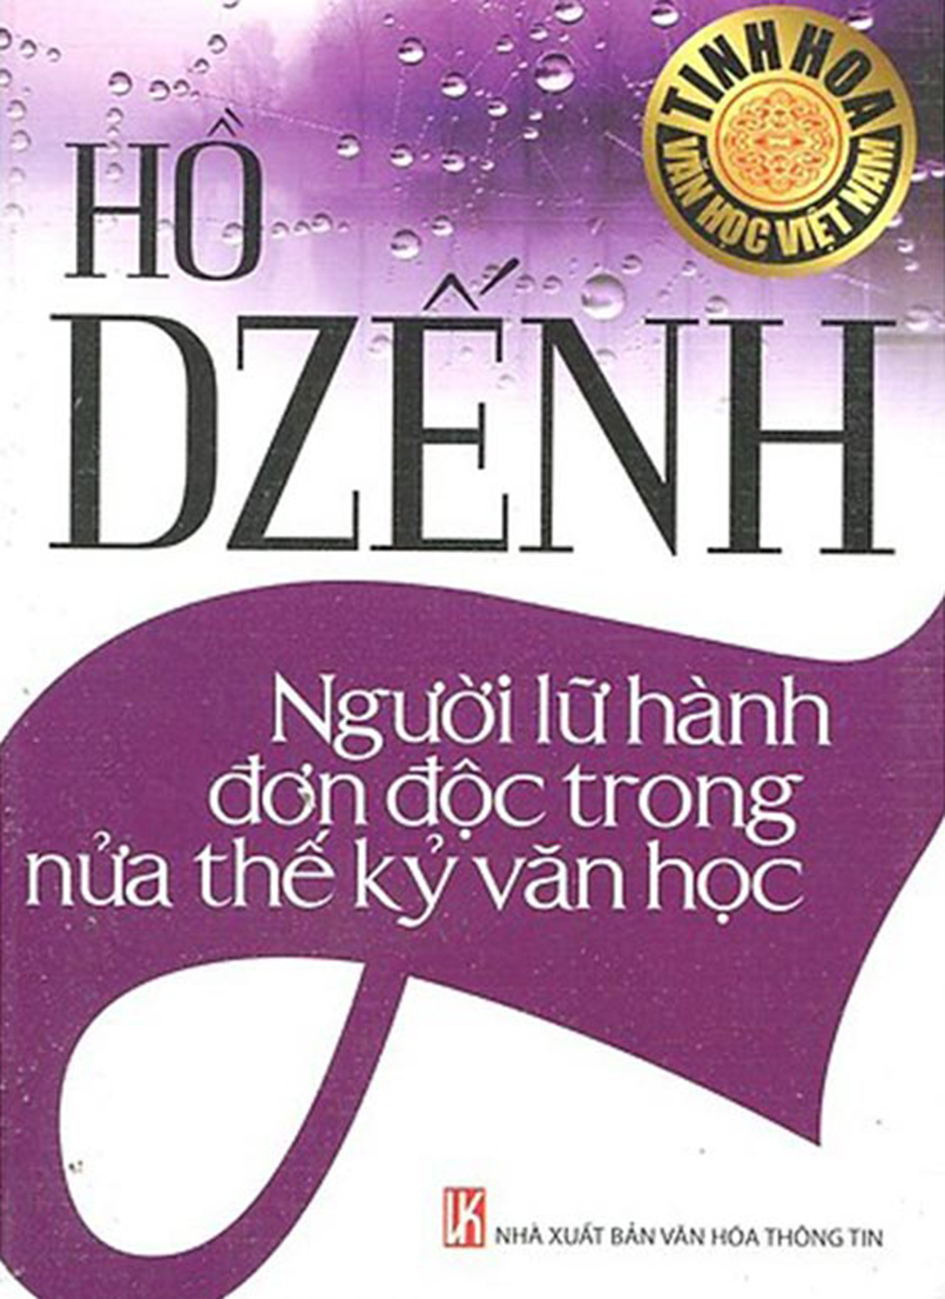 Tuyen tap tho Ho Dzenh